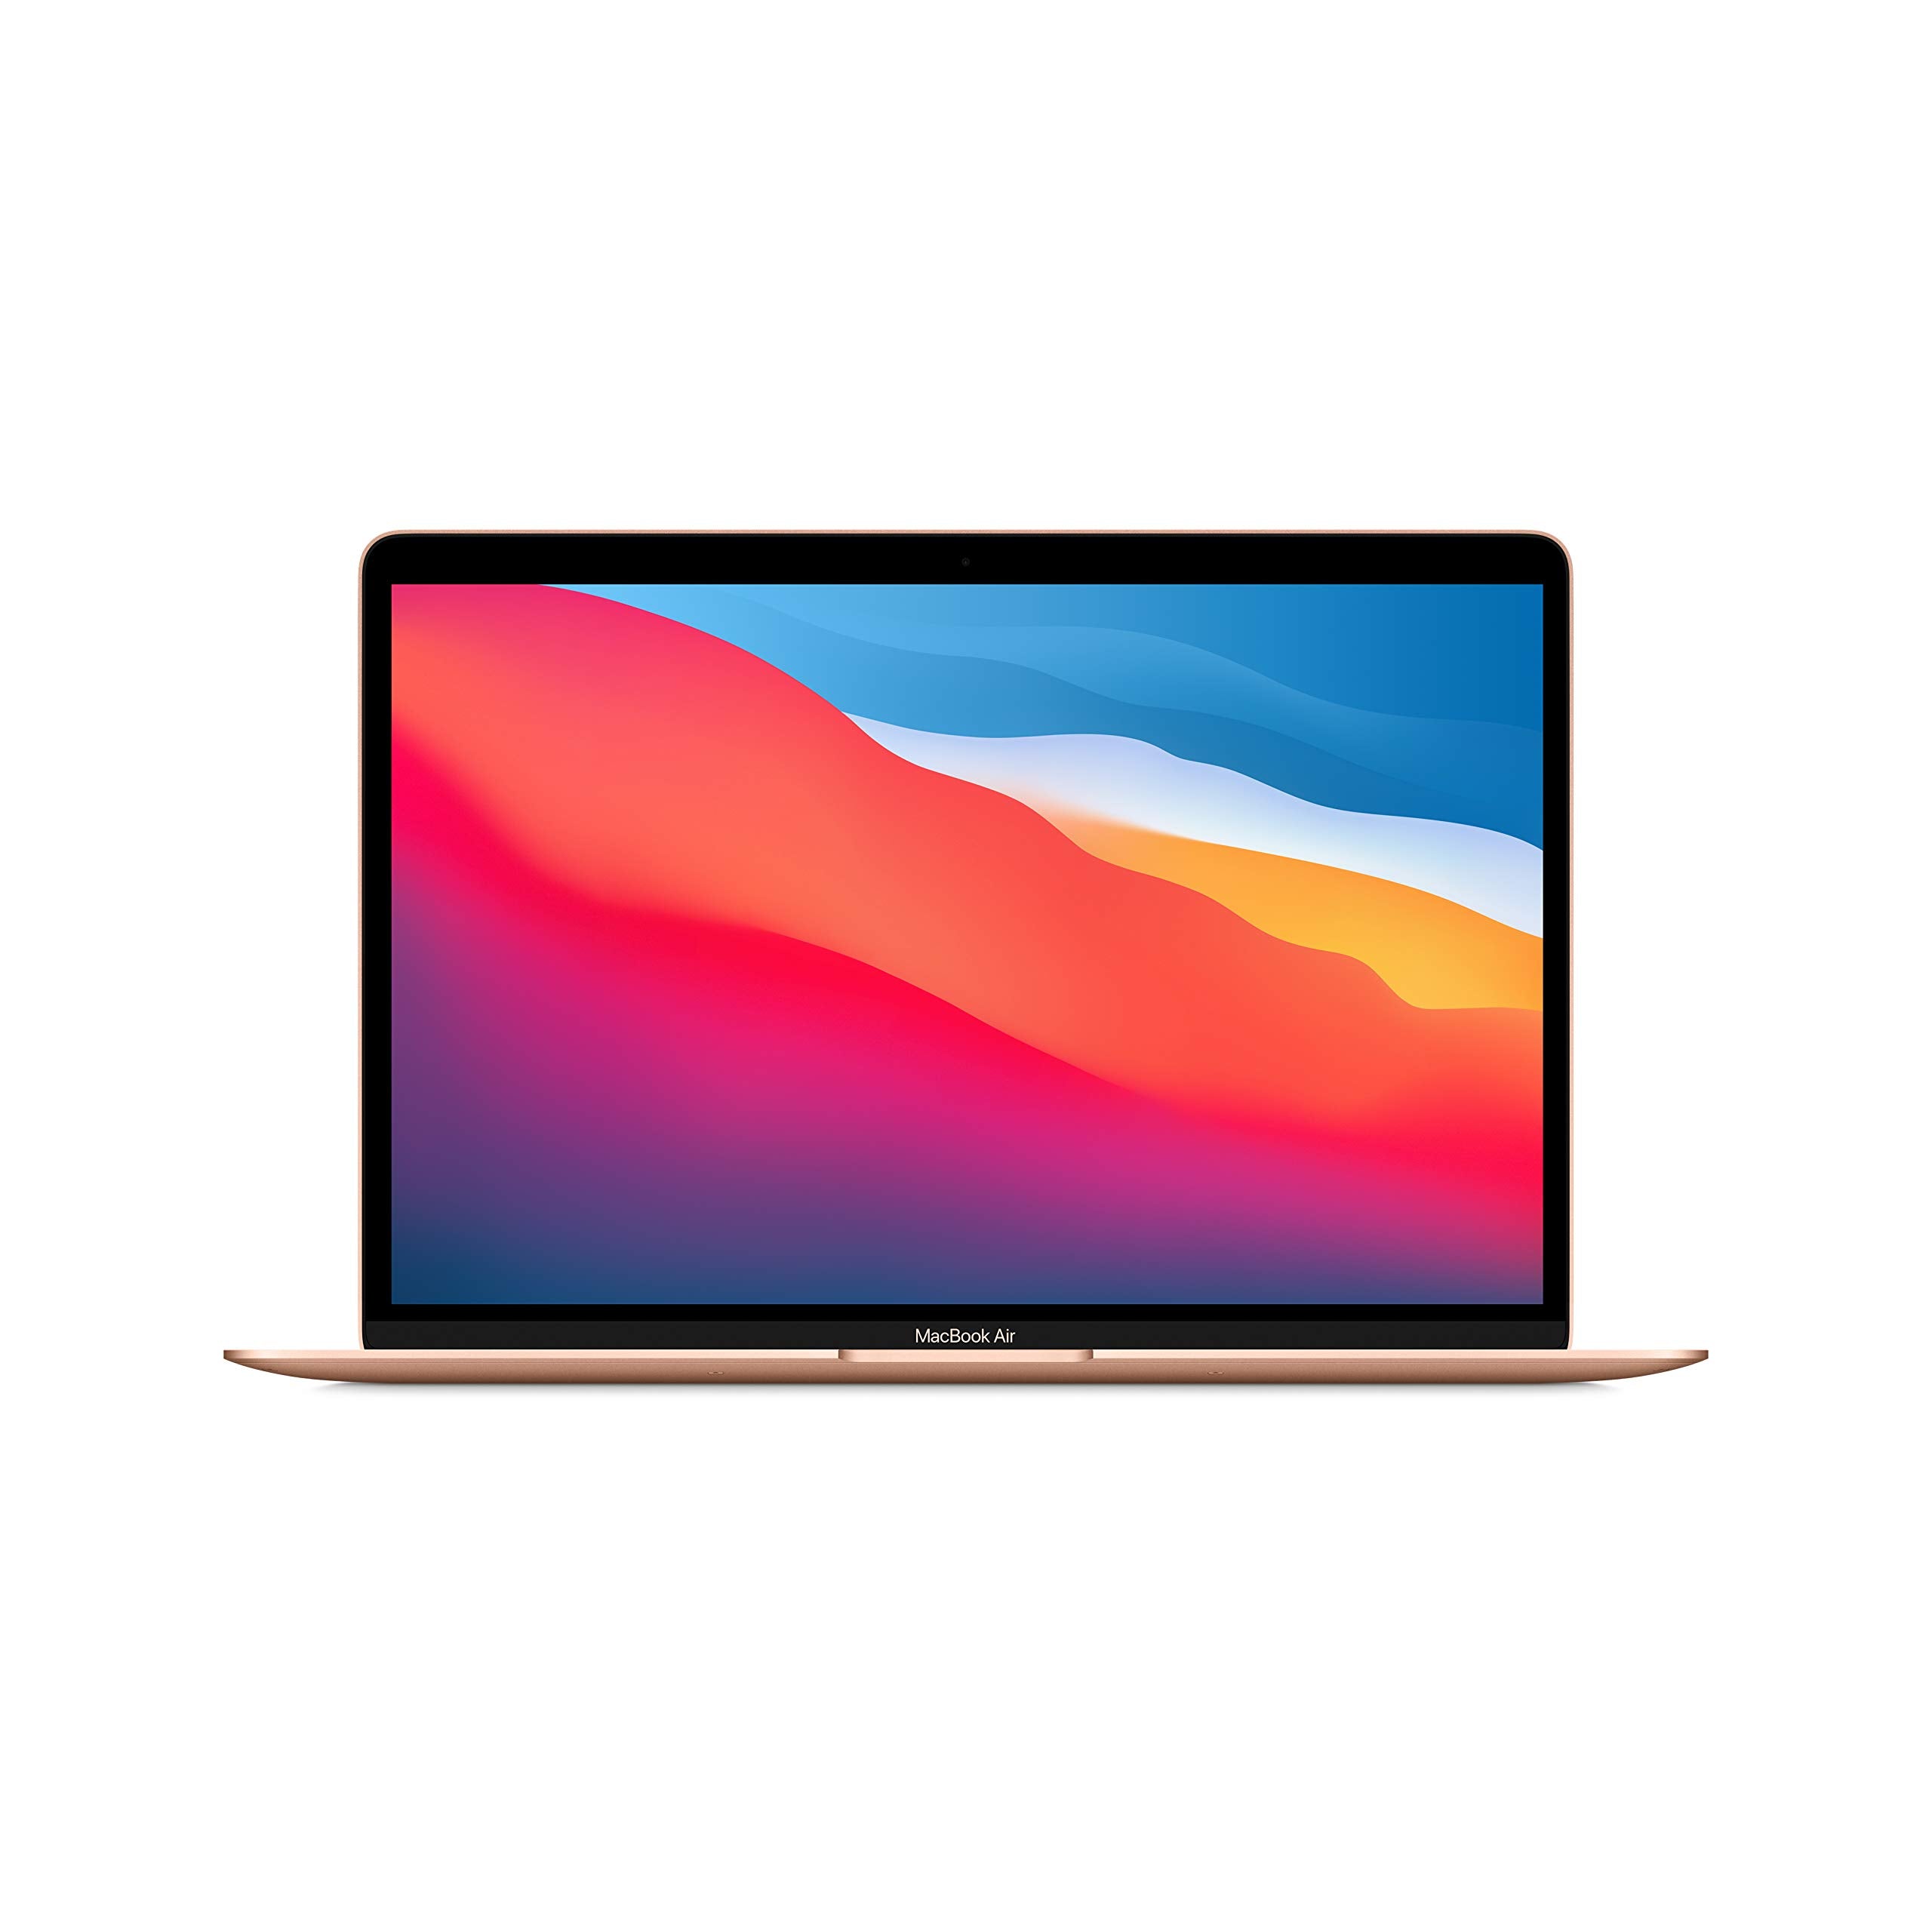 2020 Apple MacBook Air Laptop: Apple M1 Chip, 13” Retina Display, 8GB RAM, 256GB SSD Storage, Backlit Keyboard, FaceTime HD Camera, Touch ID; Gold